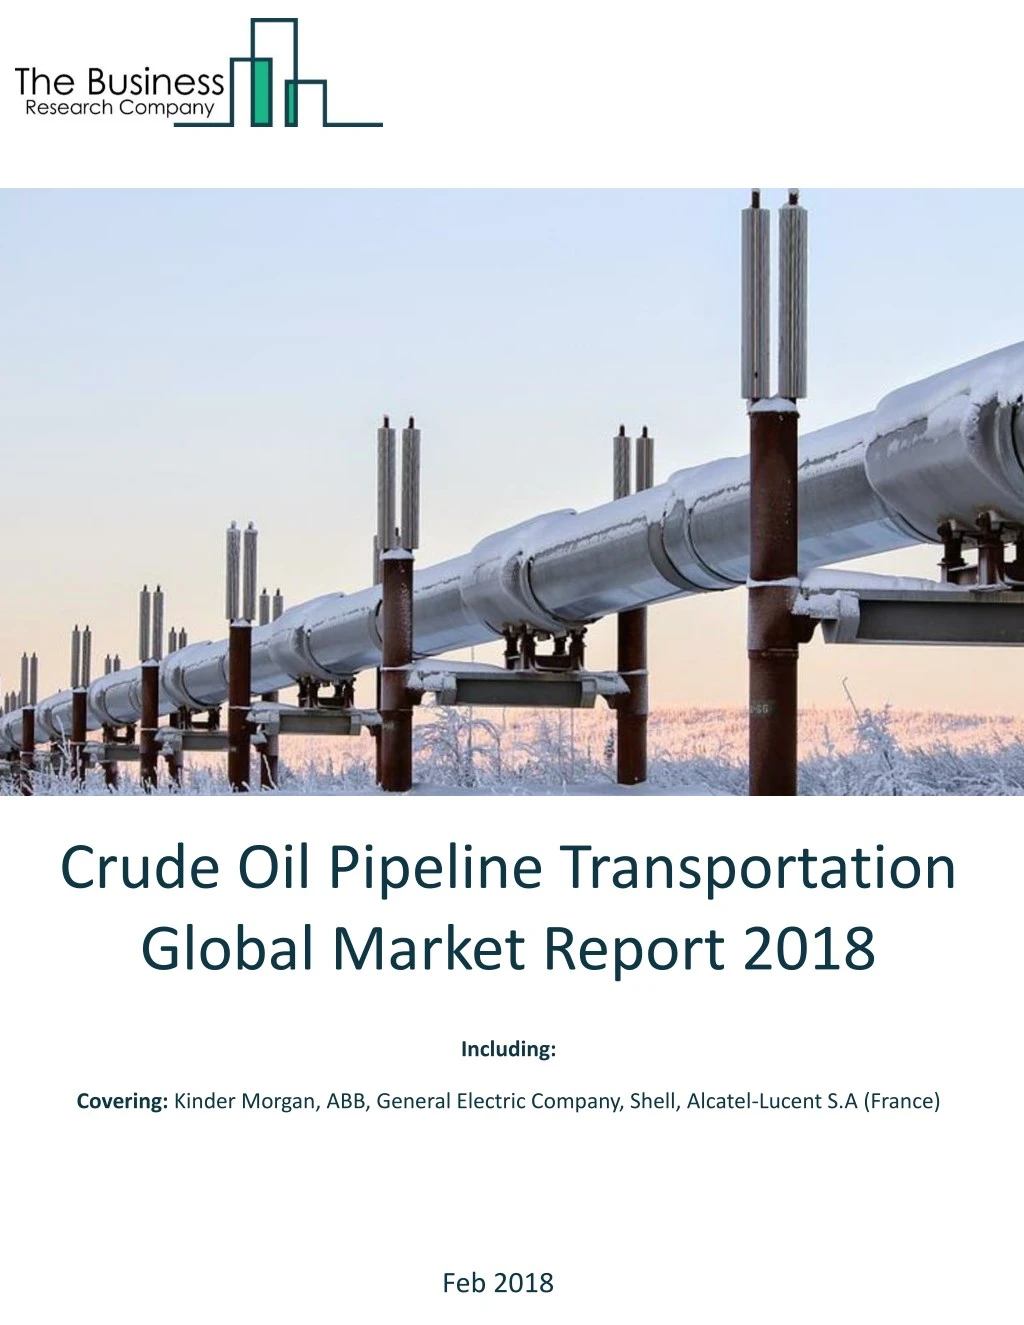 crude oil pipeline transportation global market